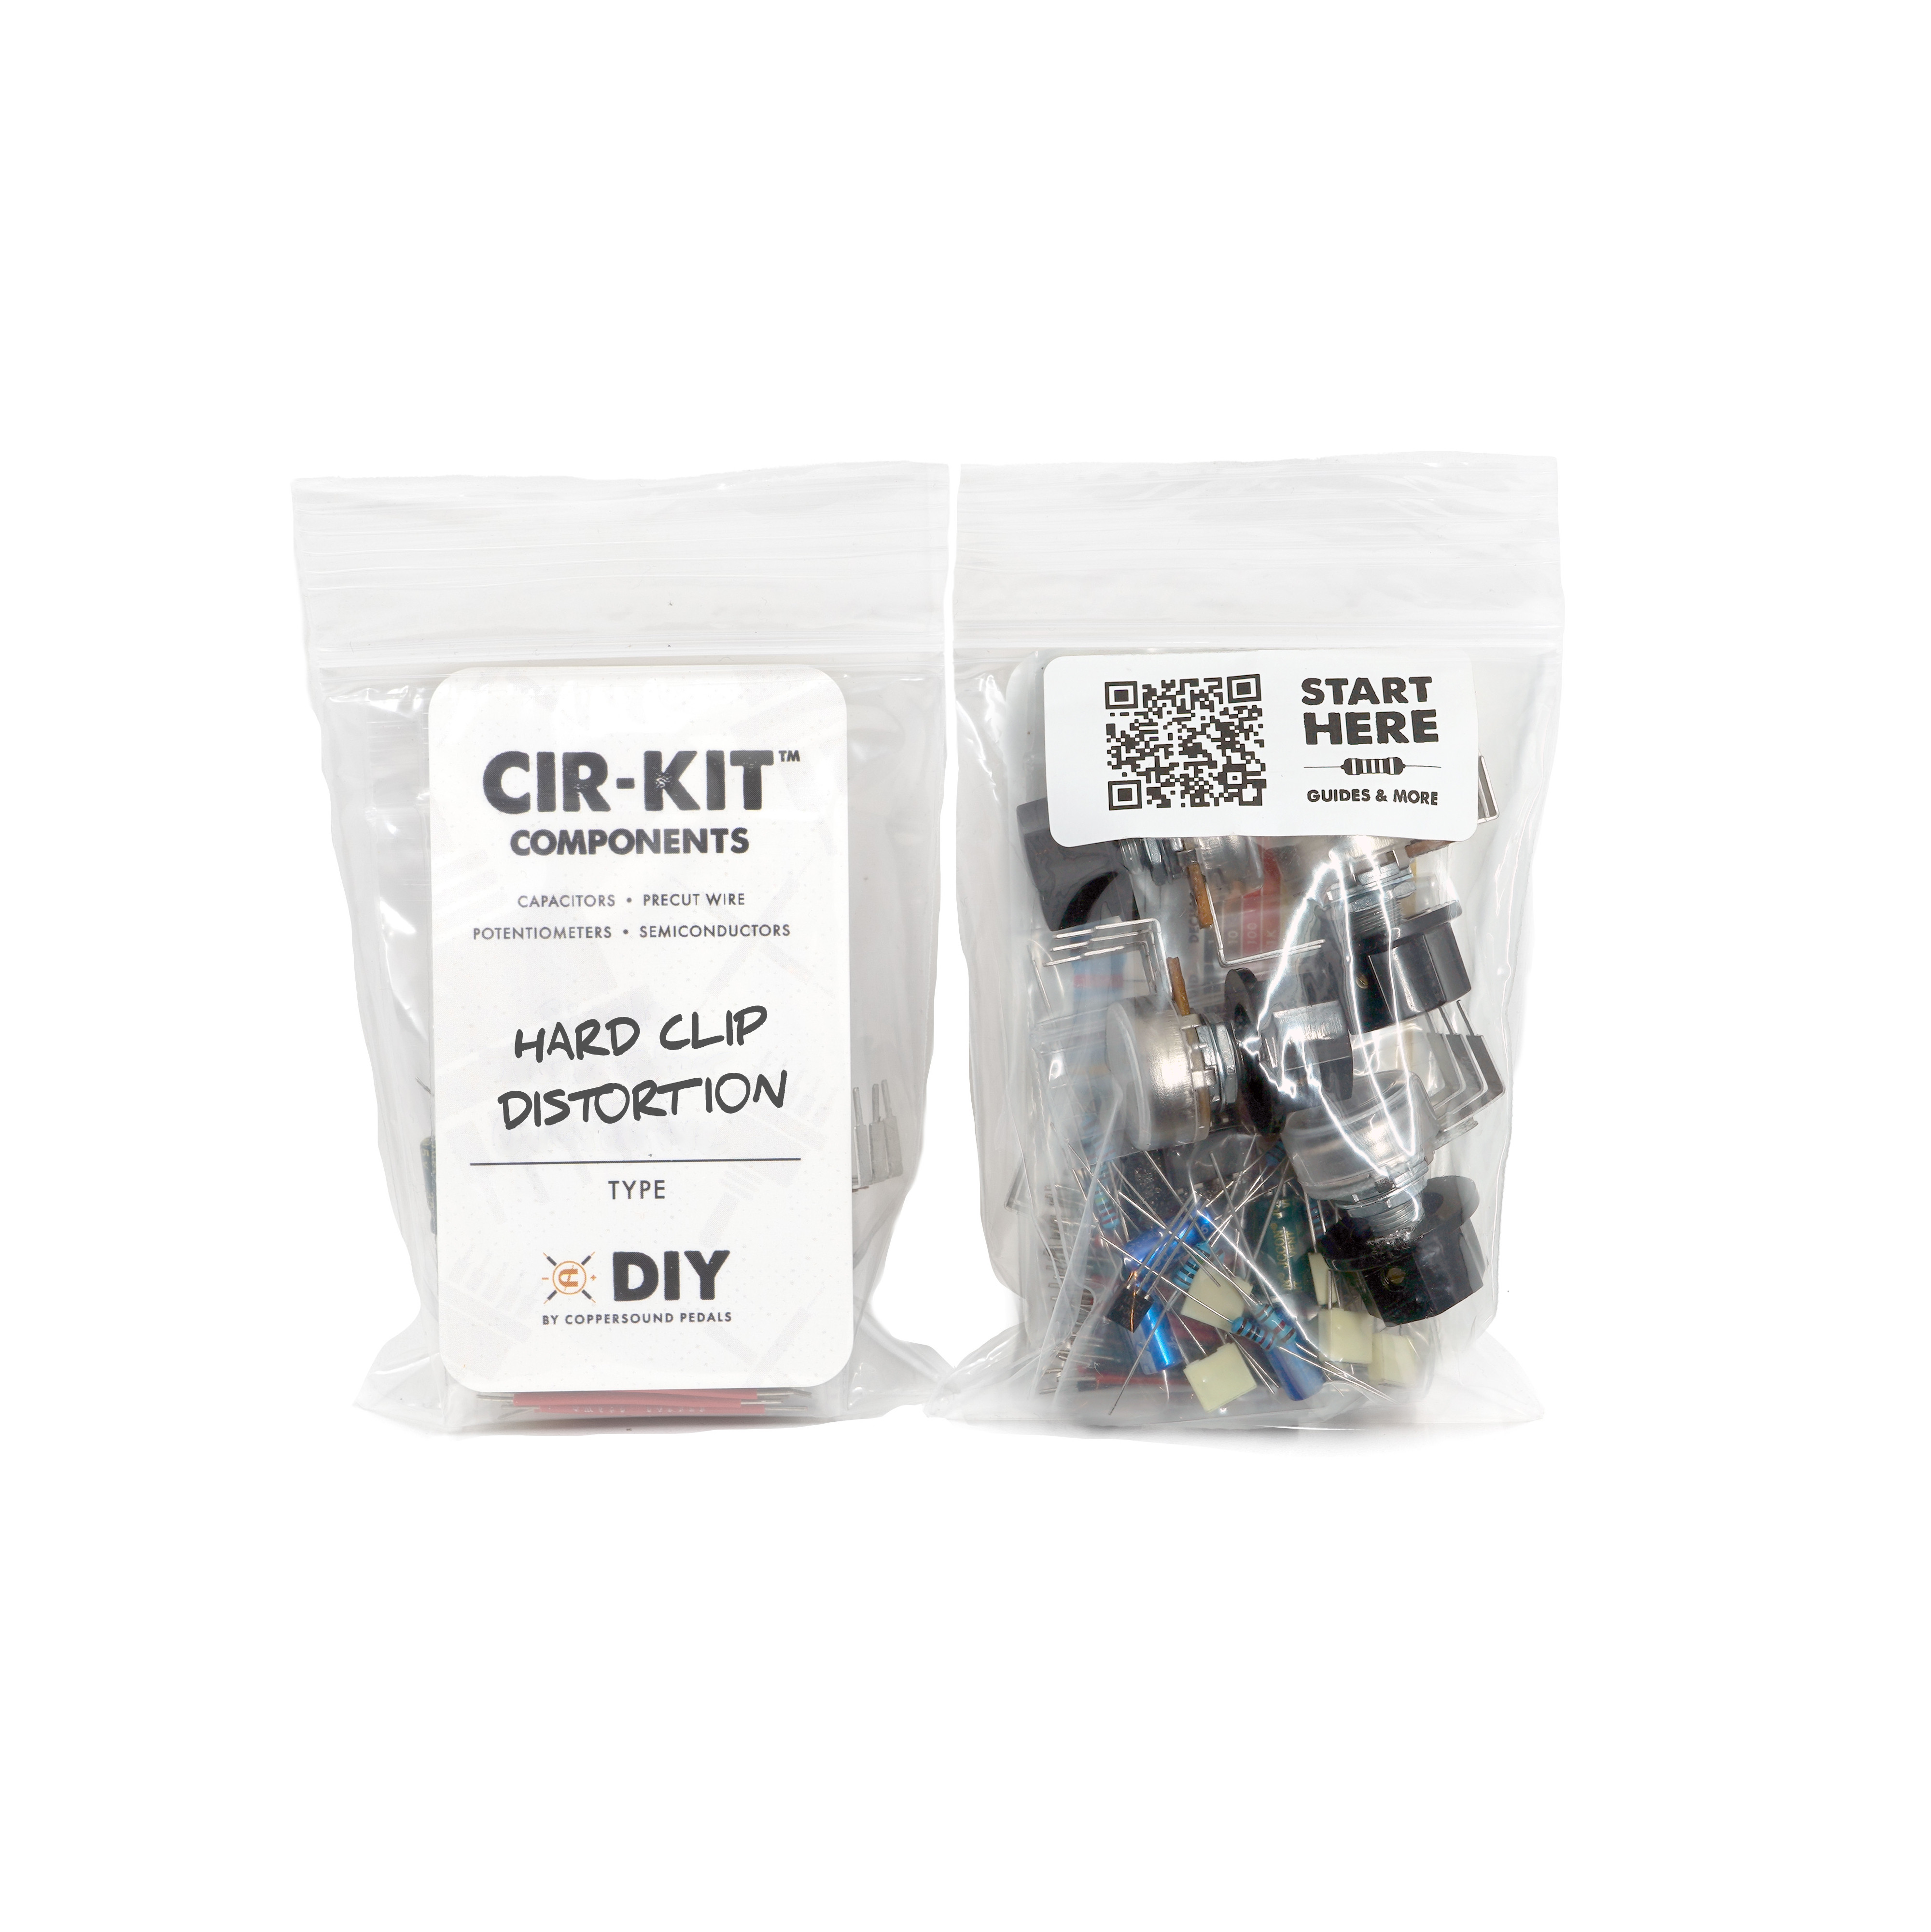 COPPERSOUND Hard Clip Distortion Cir-Kit Component Bag